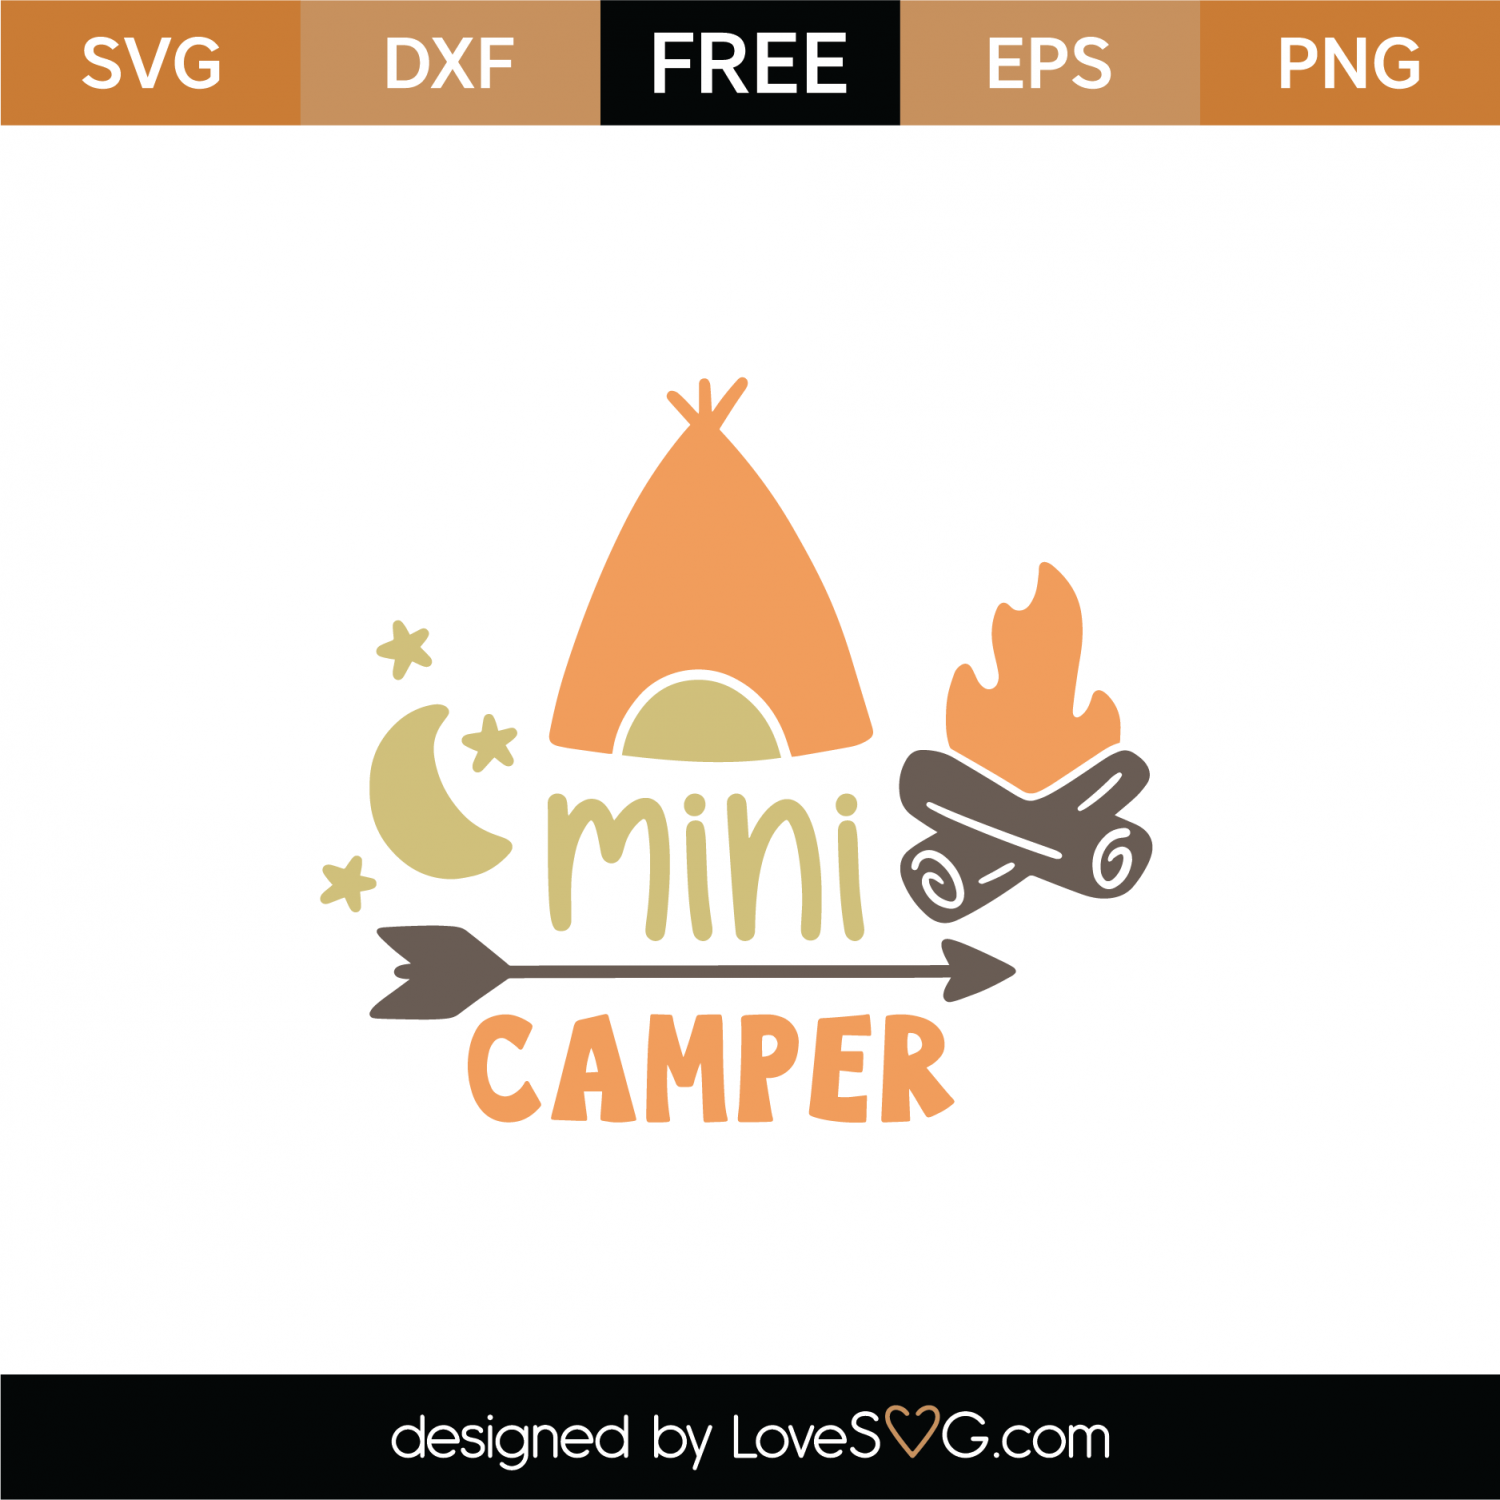 Download Free Mini Camper SVG Cut File | Lovesvg.com